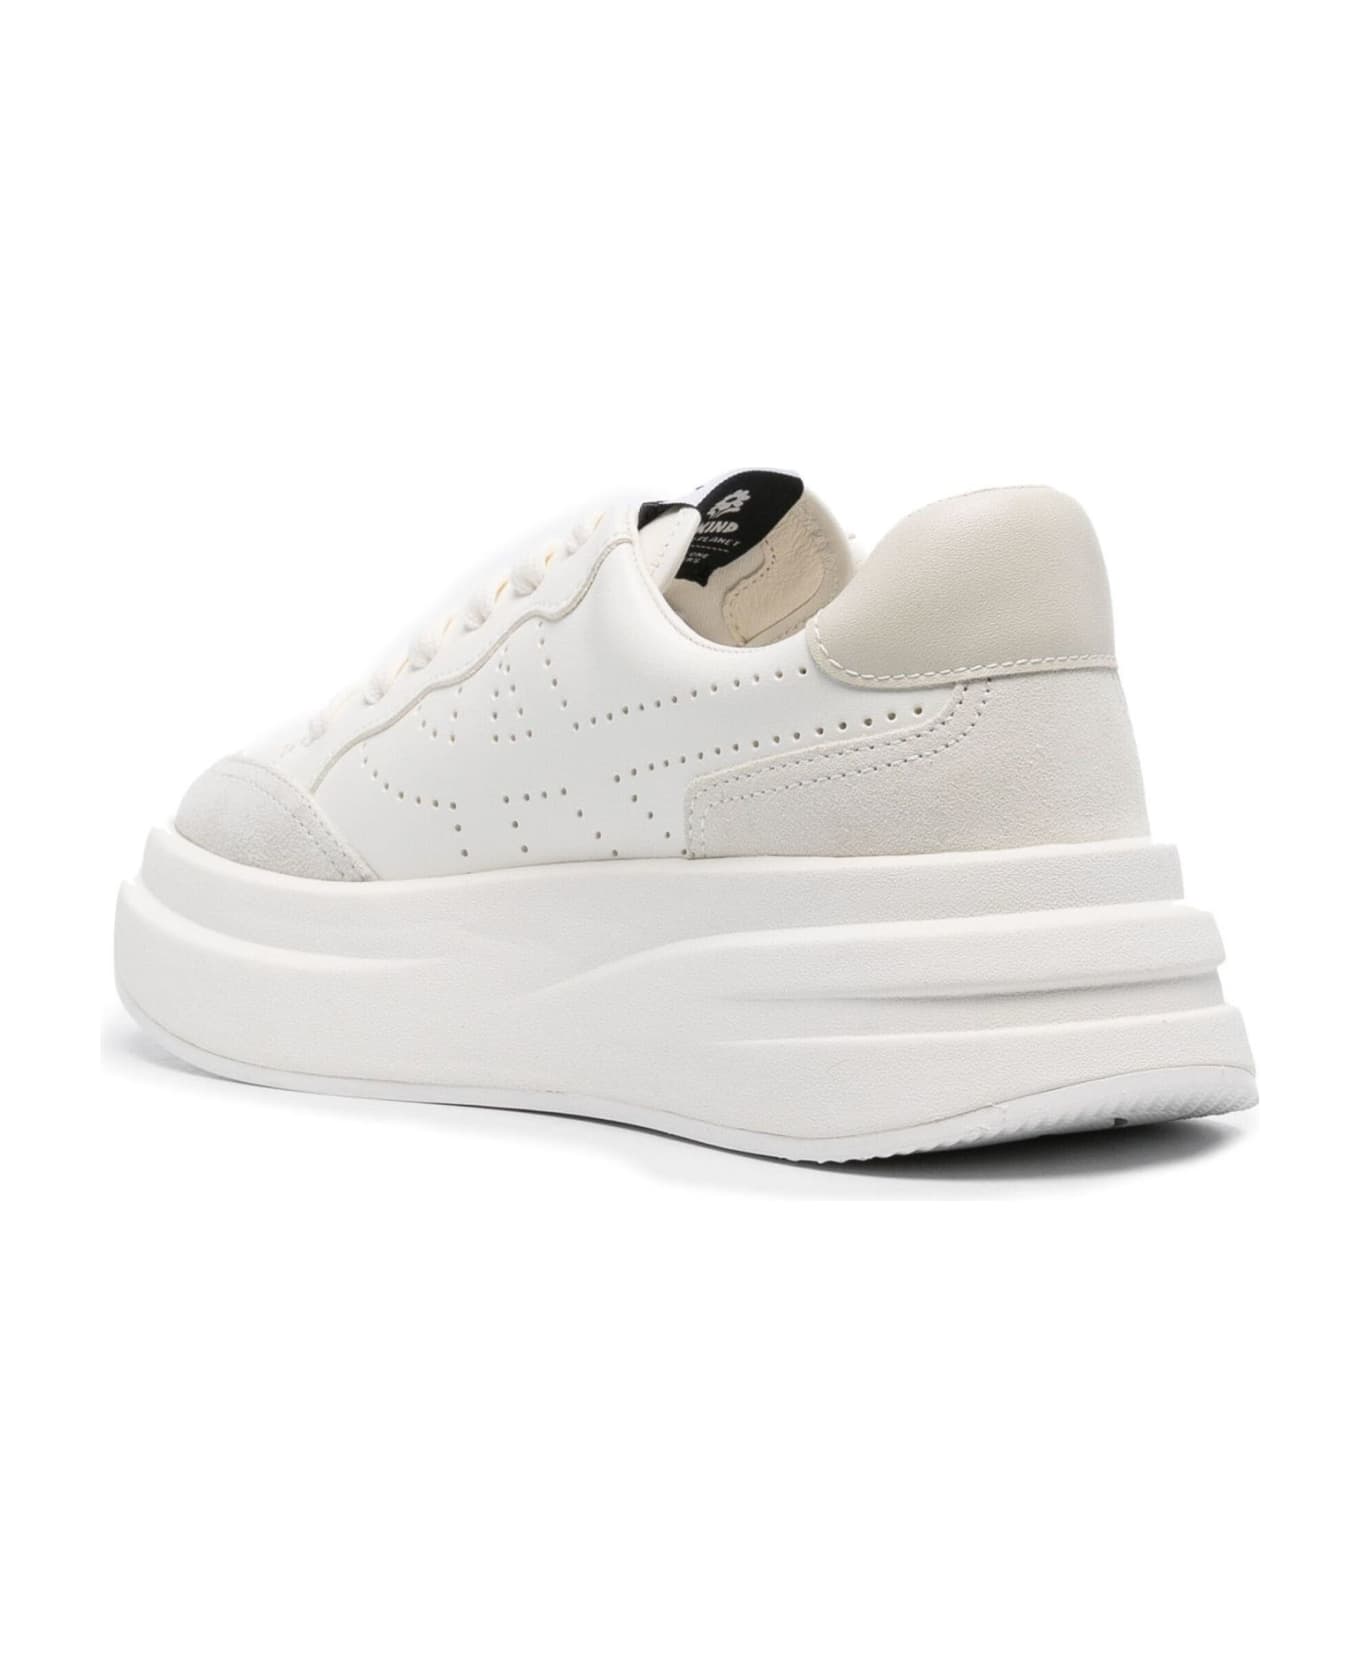 Ash White Calf Leather Sneakers - White talco white